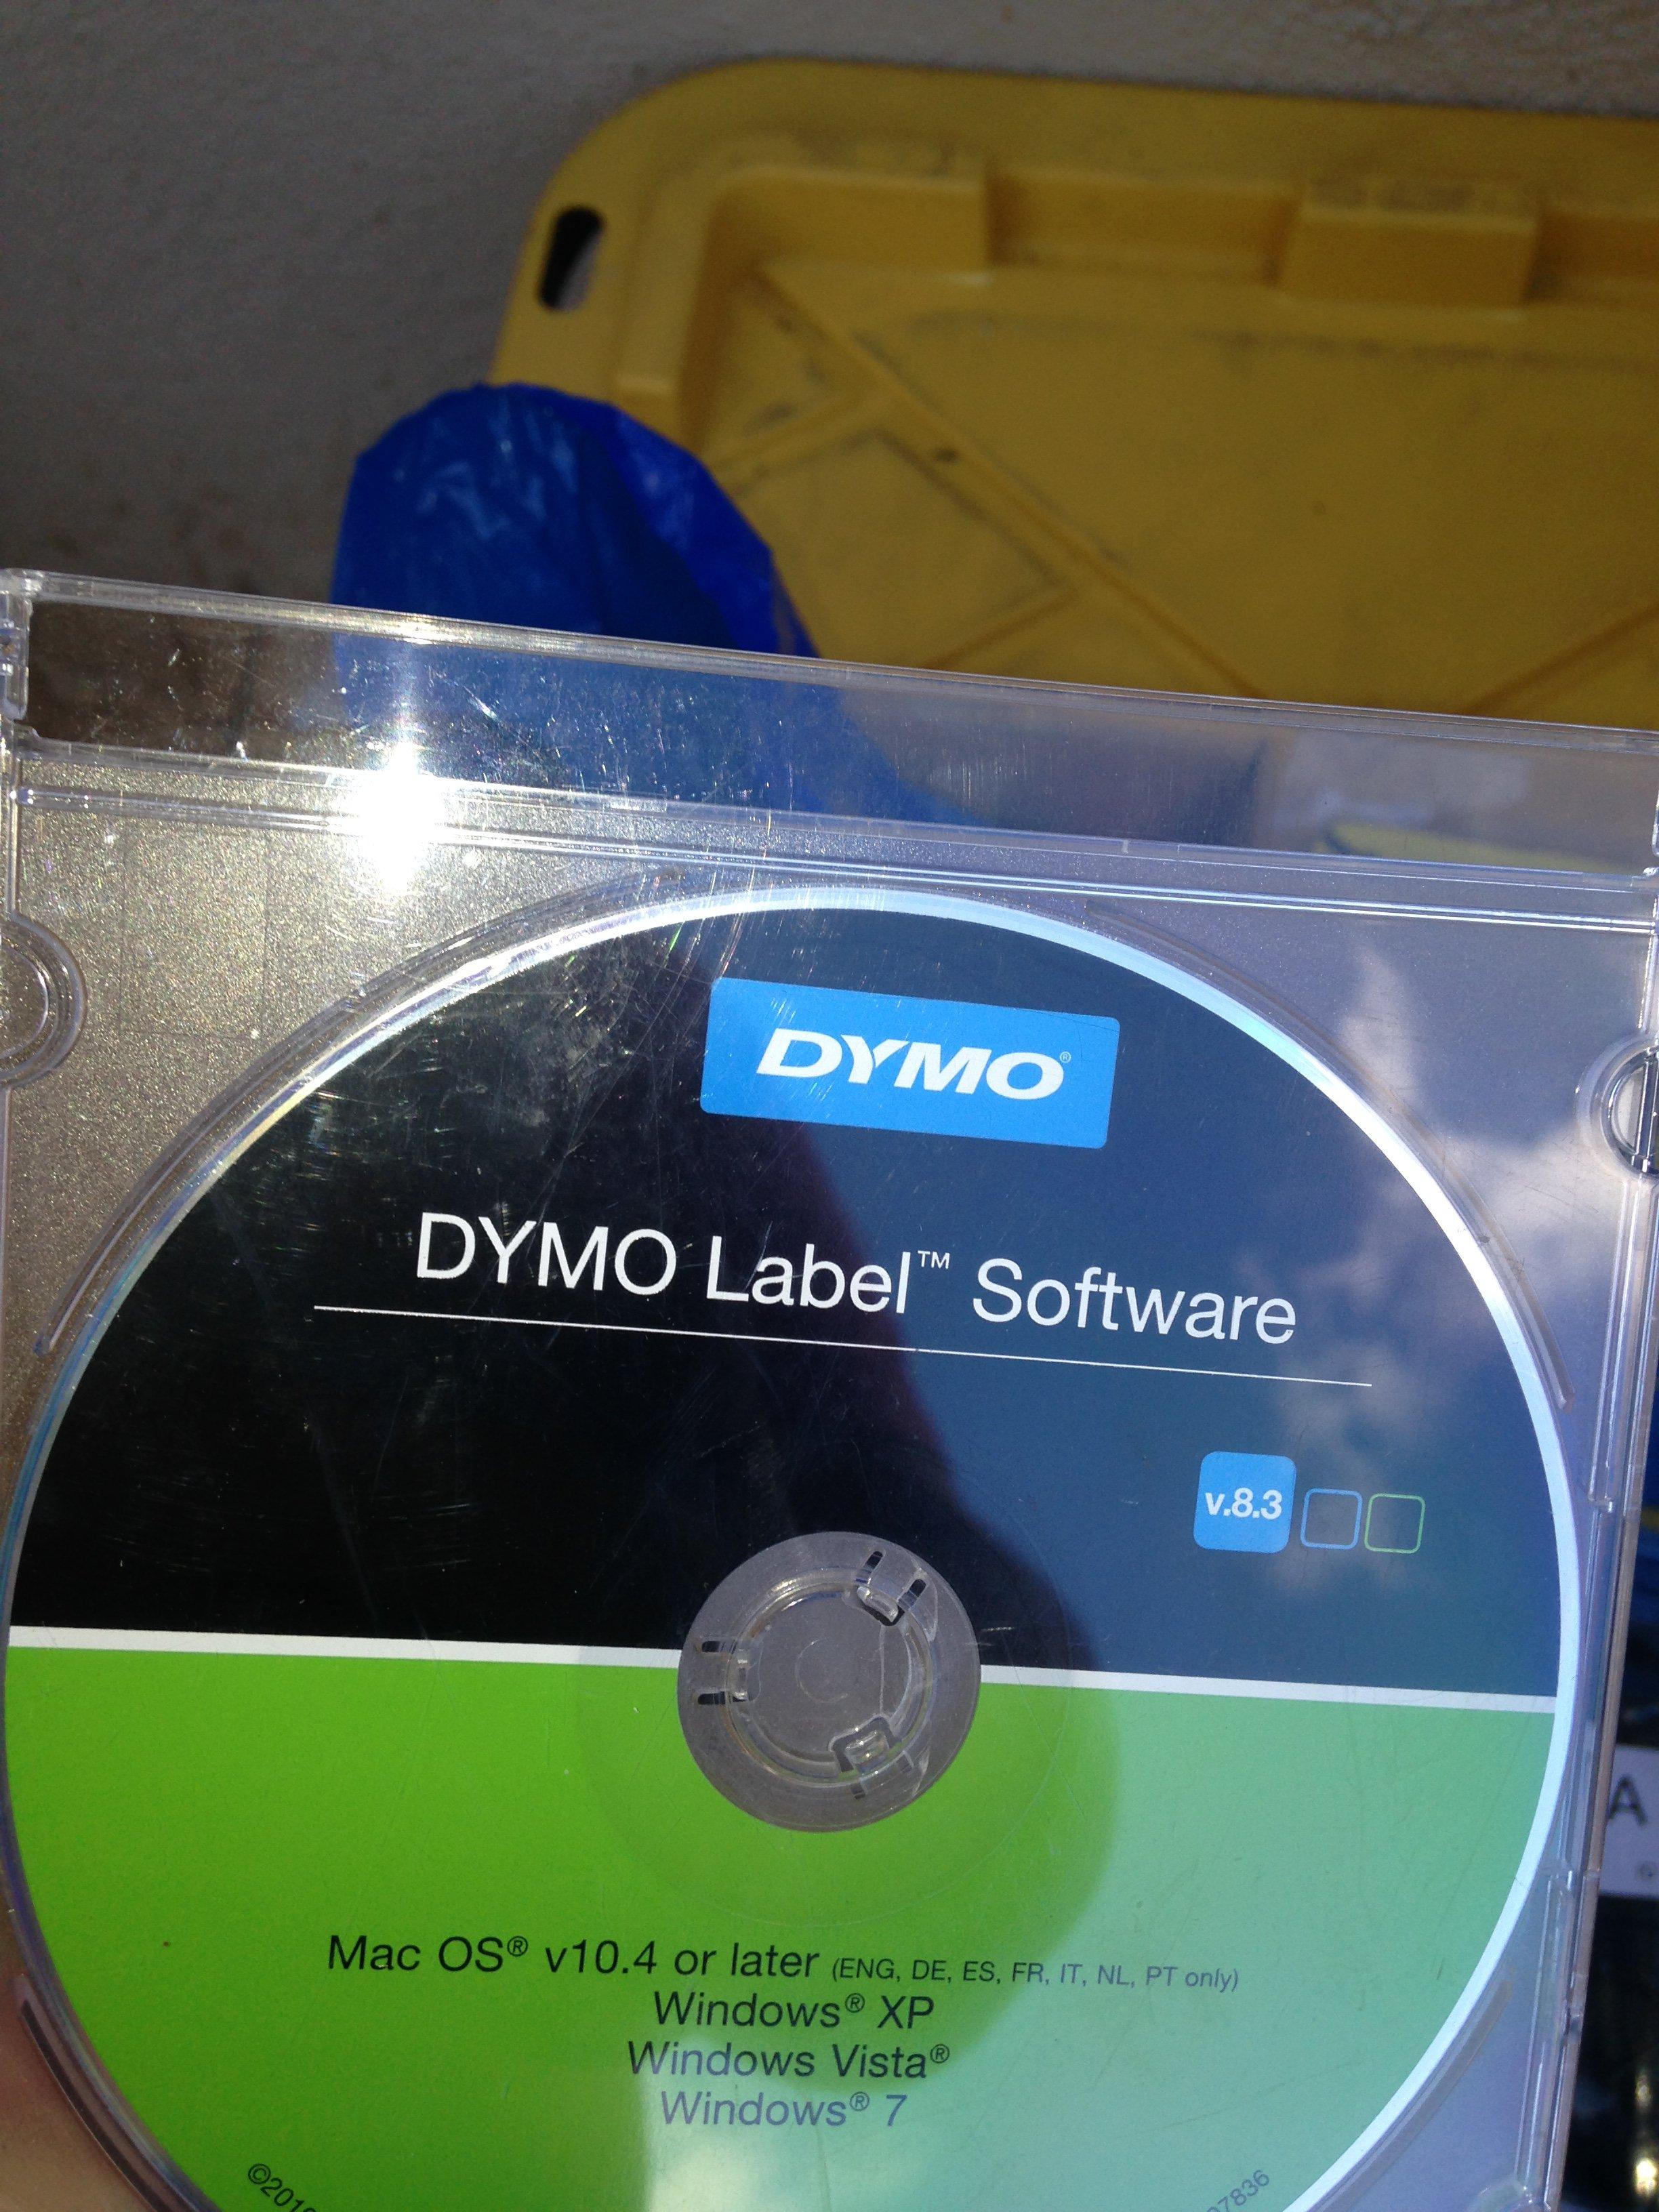 DYMO label printer 450 twin printer plus bin full of accessories and labels